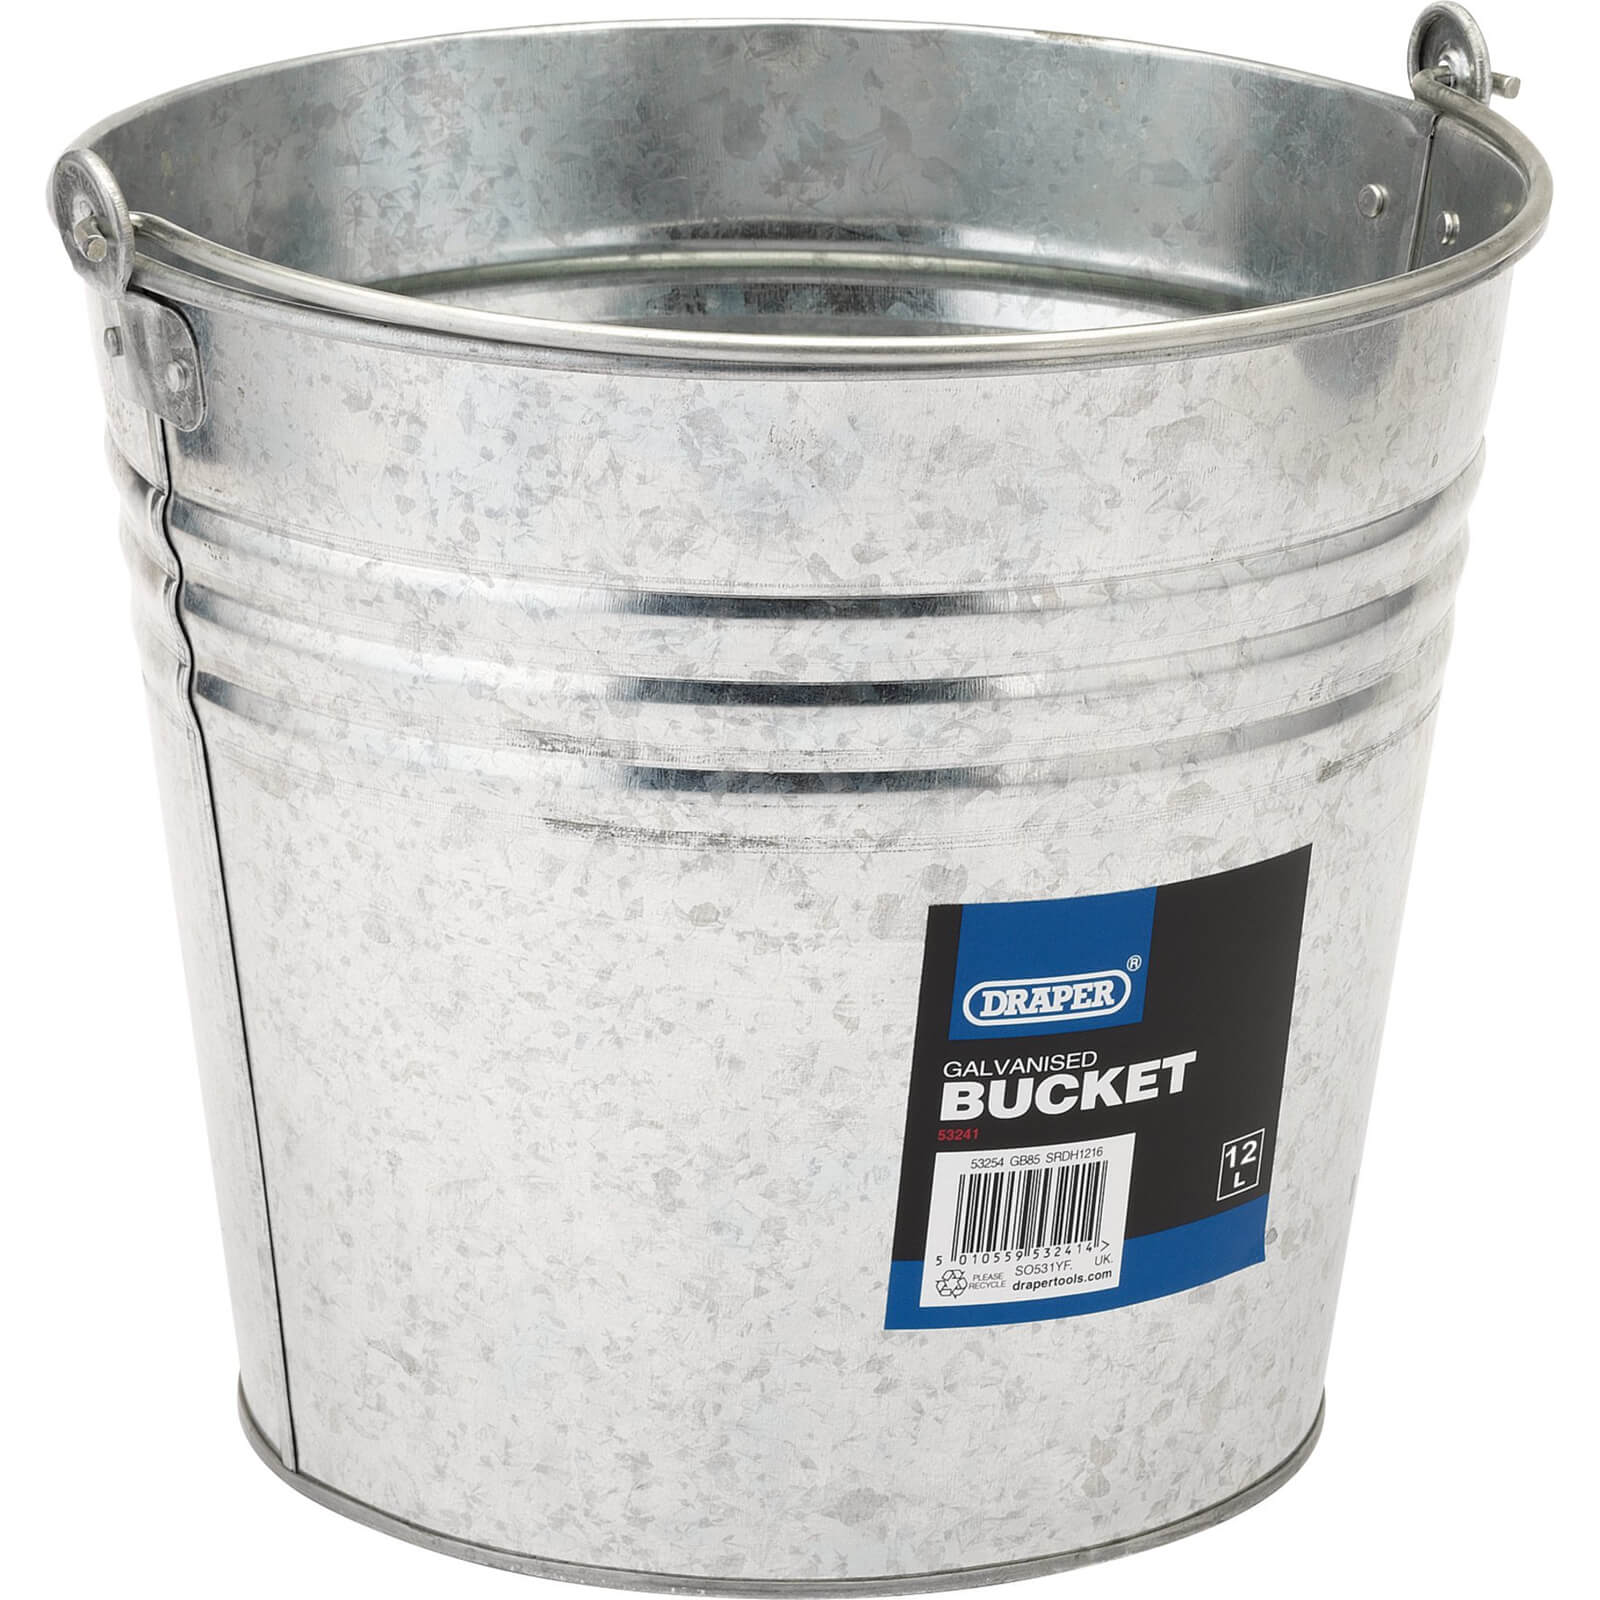 Image of Draper Galvanised Steel Bucket